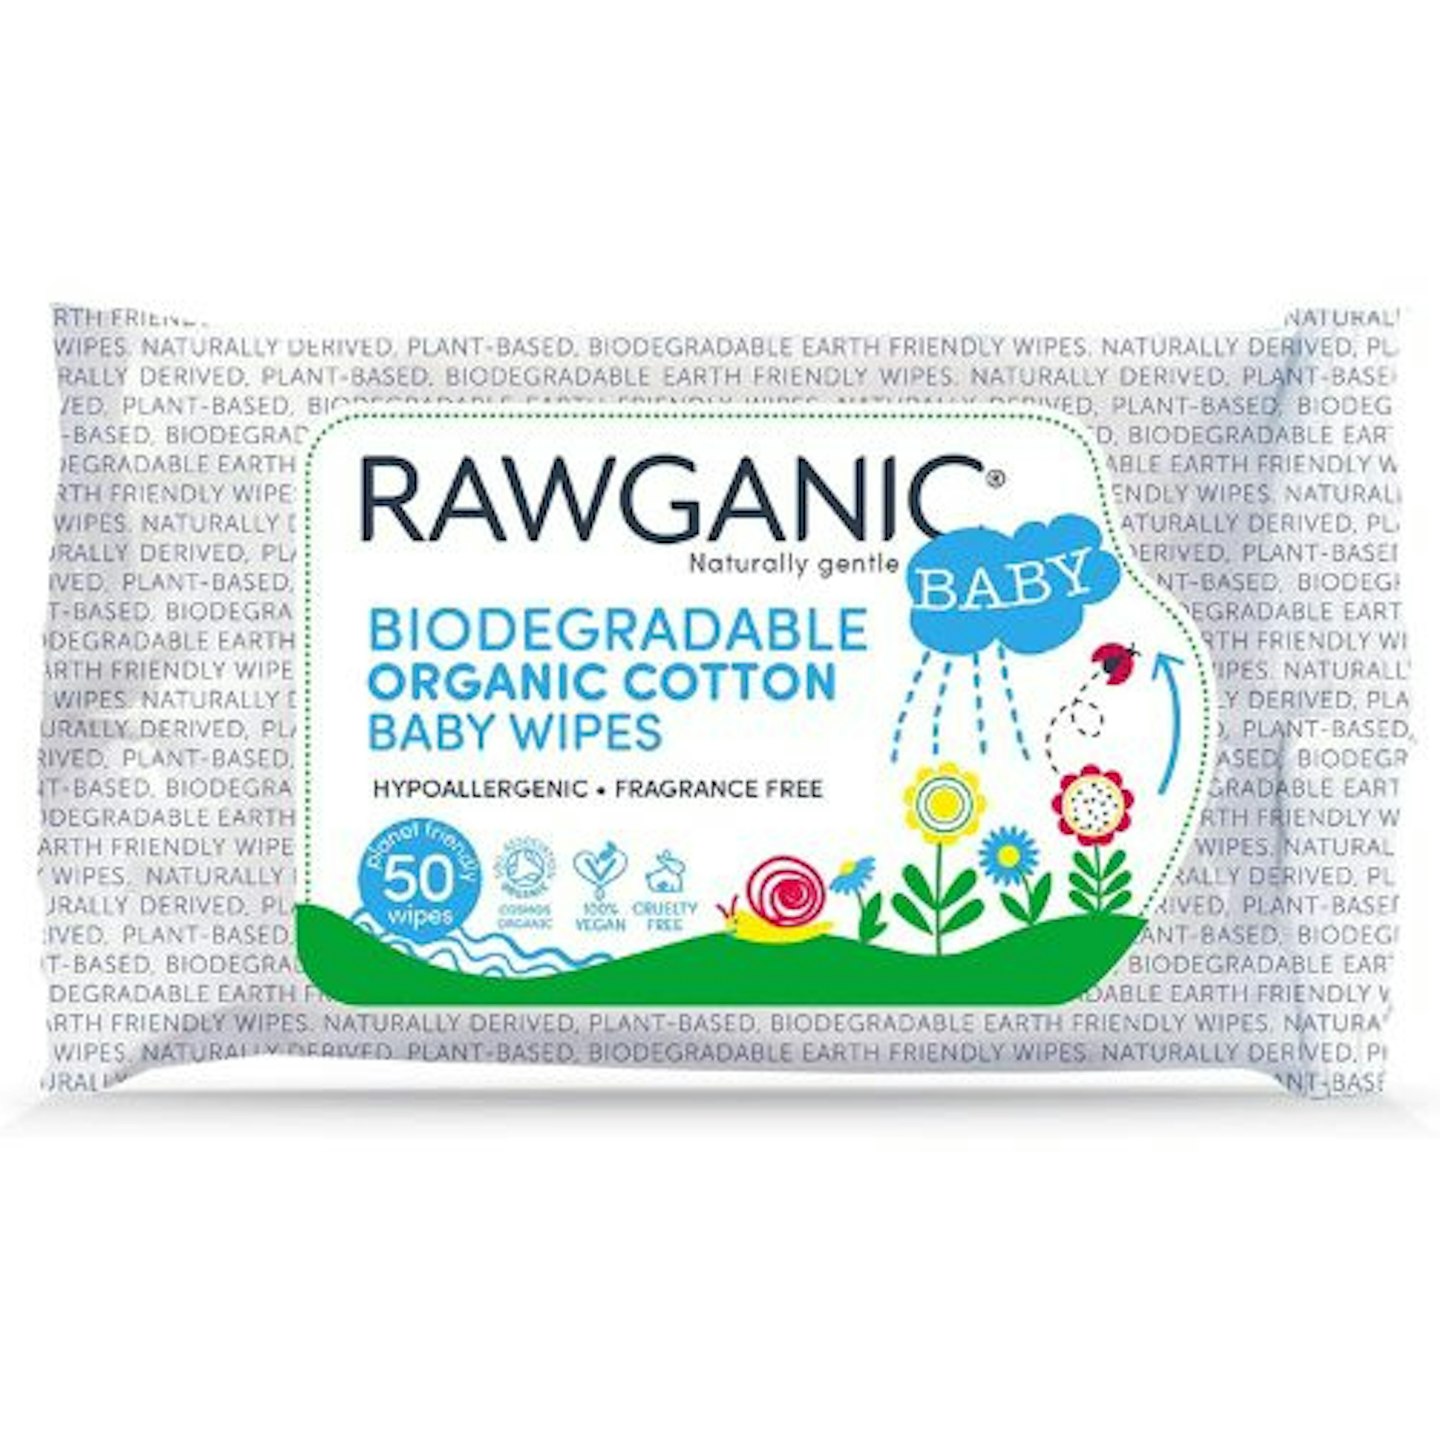 RAWGANIC Biodegradable Organic Cotton Baby Wipes